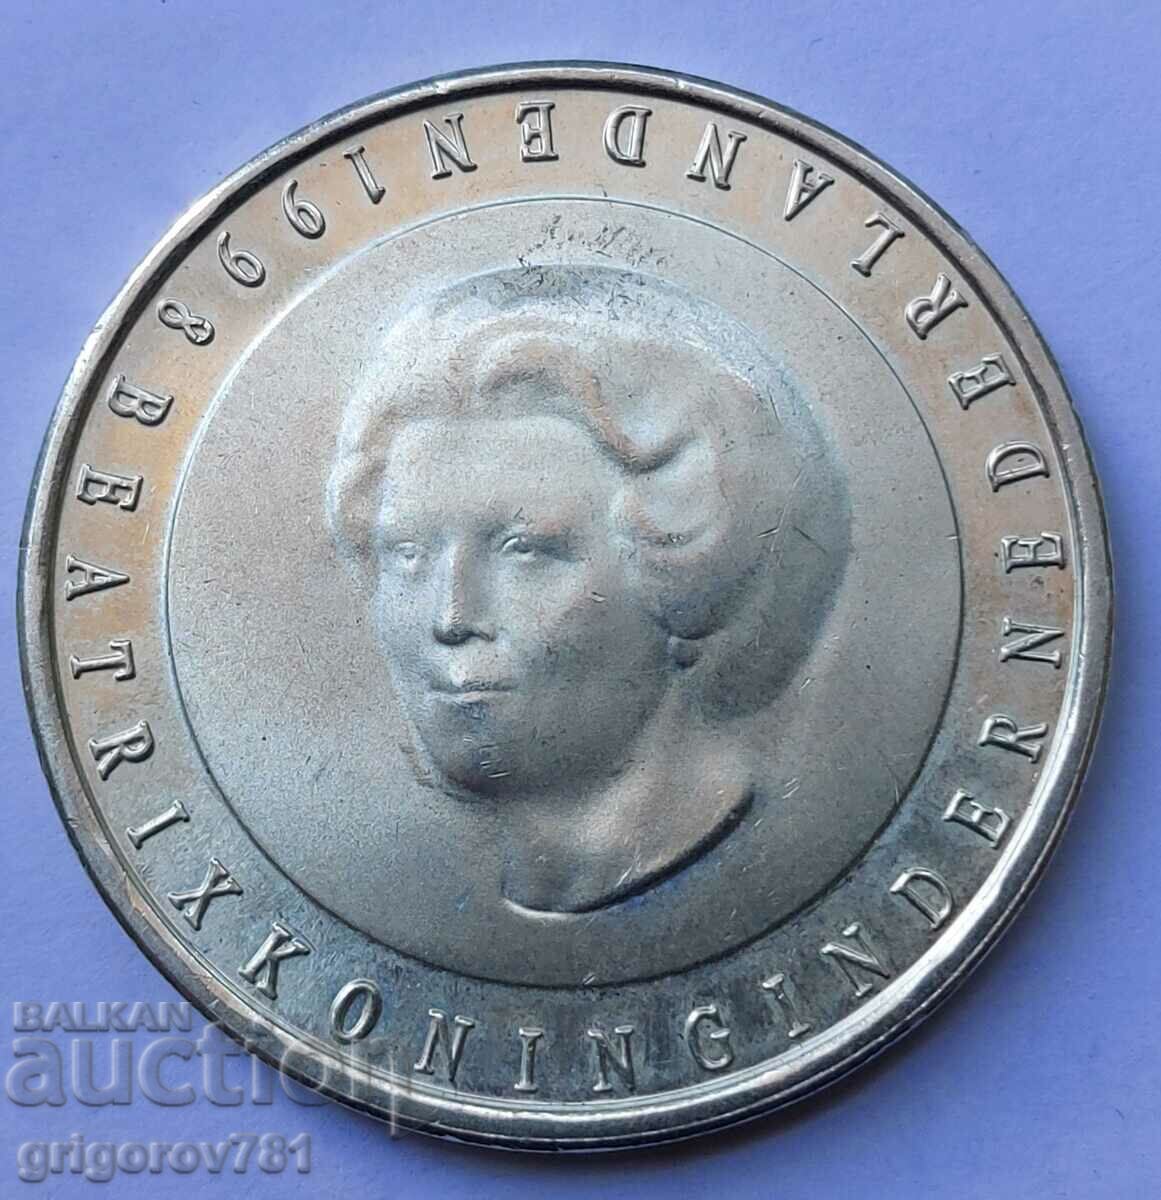 50 Guilder Silver Netherlands 1998 - Silver Coin #12